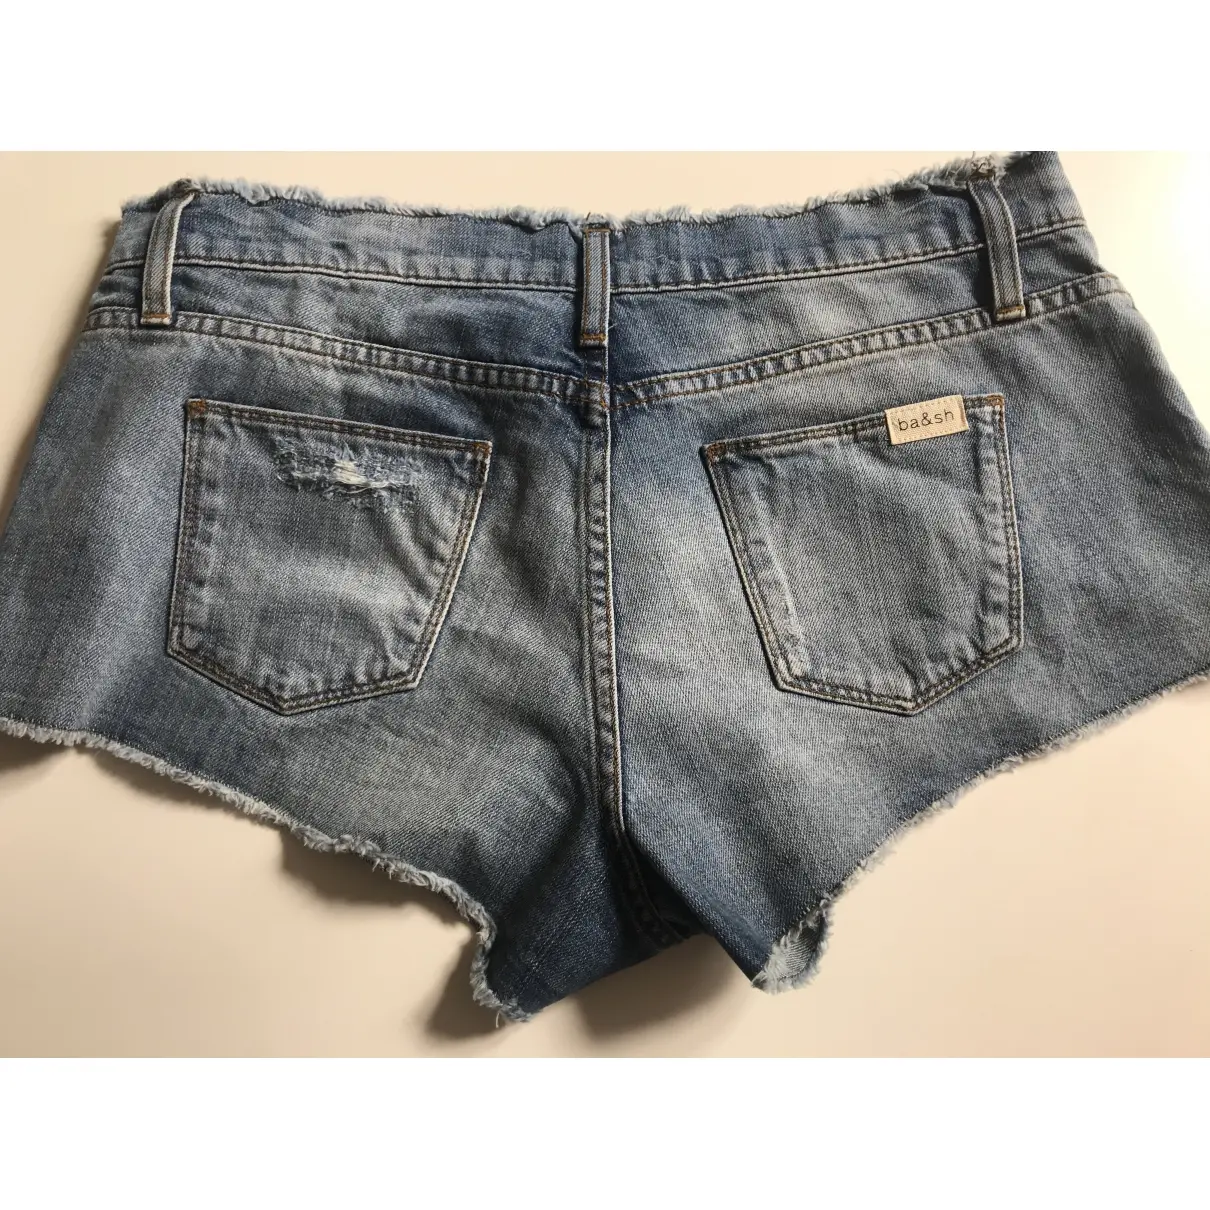 Buy Ba&sh Blue Denim - Jeans Shorts Spring Summer 2019 online